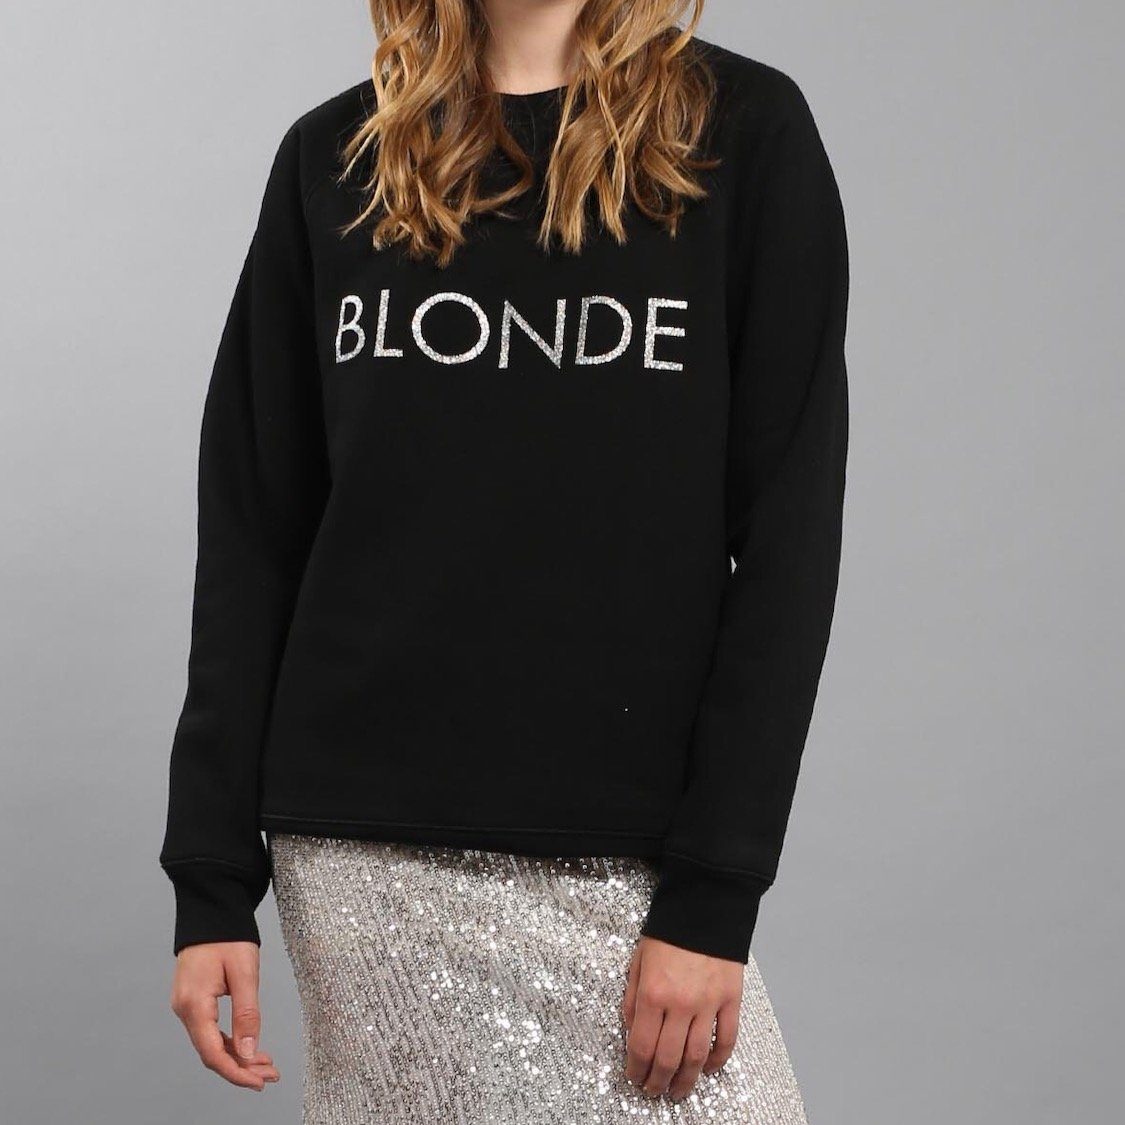 blonde crewneck sweatshirt